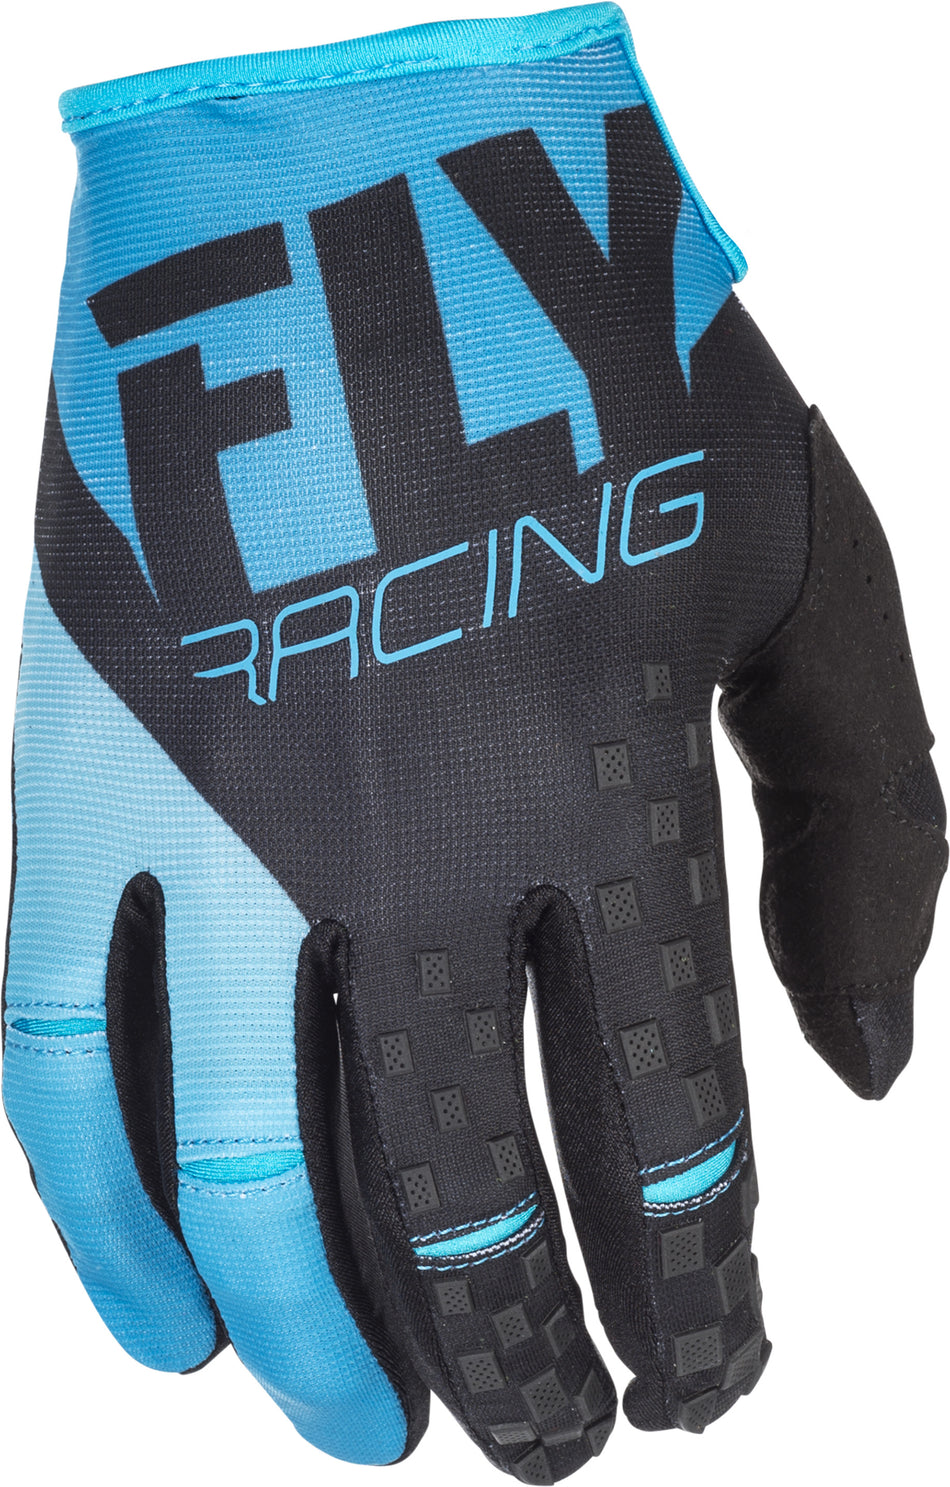 FLY RACING Kinetic Gloves Blue/Black Sz 7 371-41107